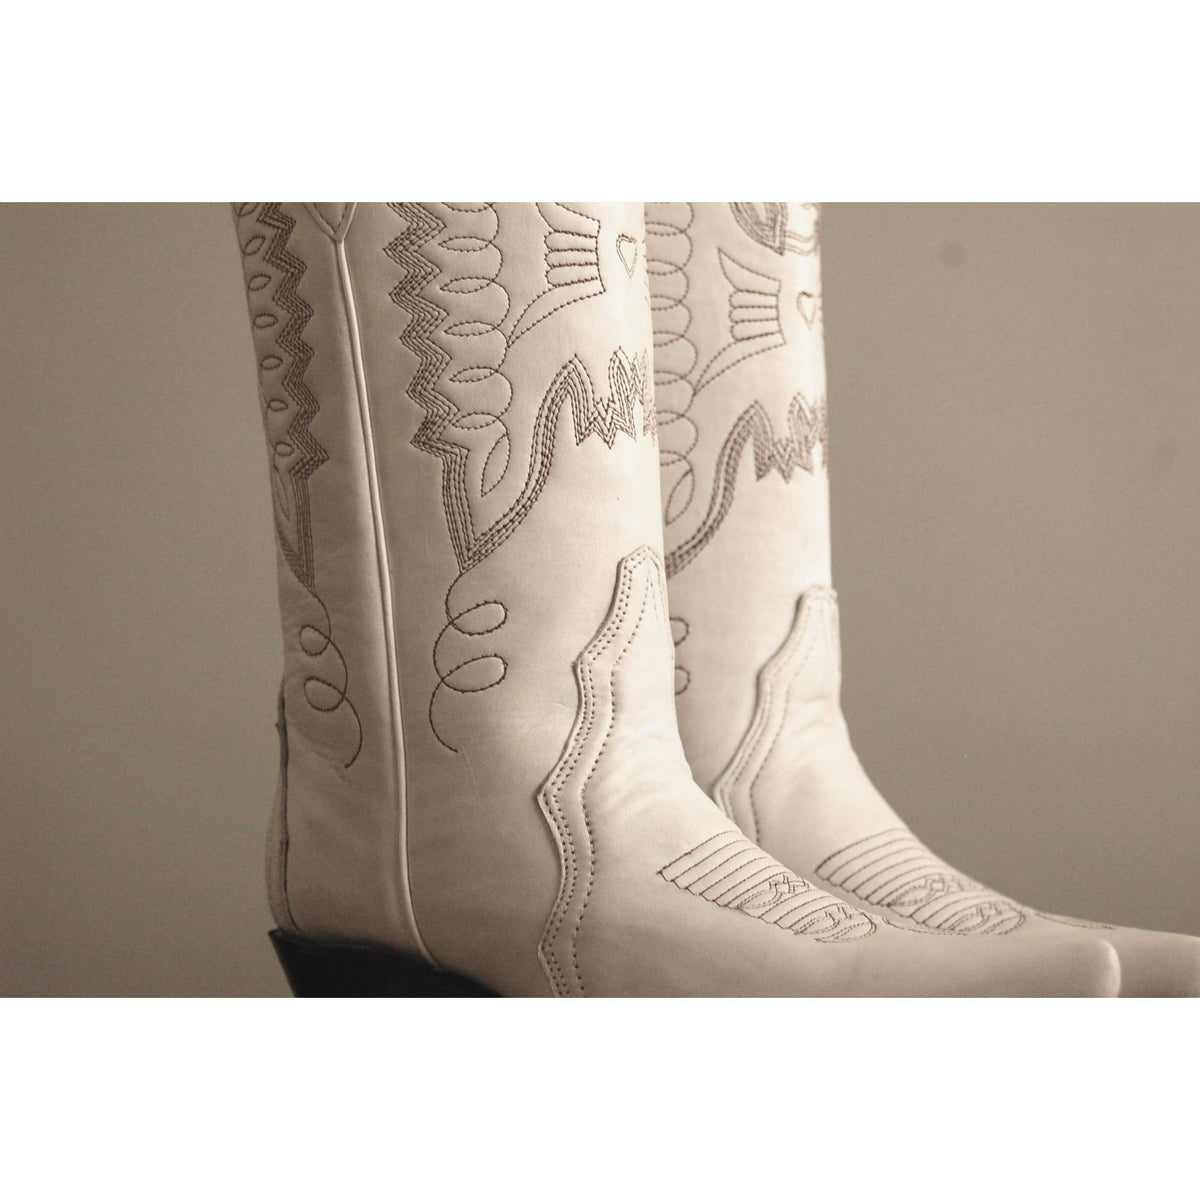 Botas Jornada Hueso / Jornada Cowboy Botas-Montserrat Messeguer-Botas,Designers,Montserrat Messeguer,Shoes